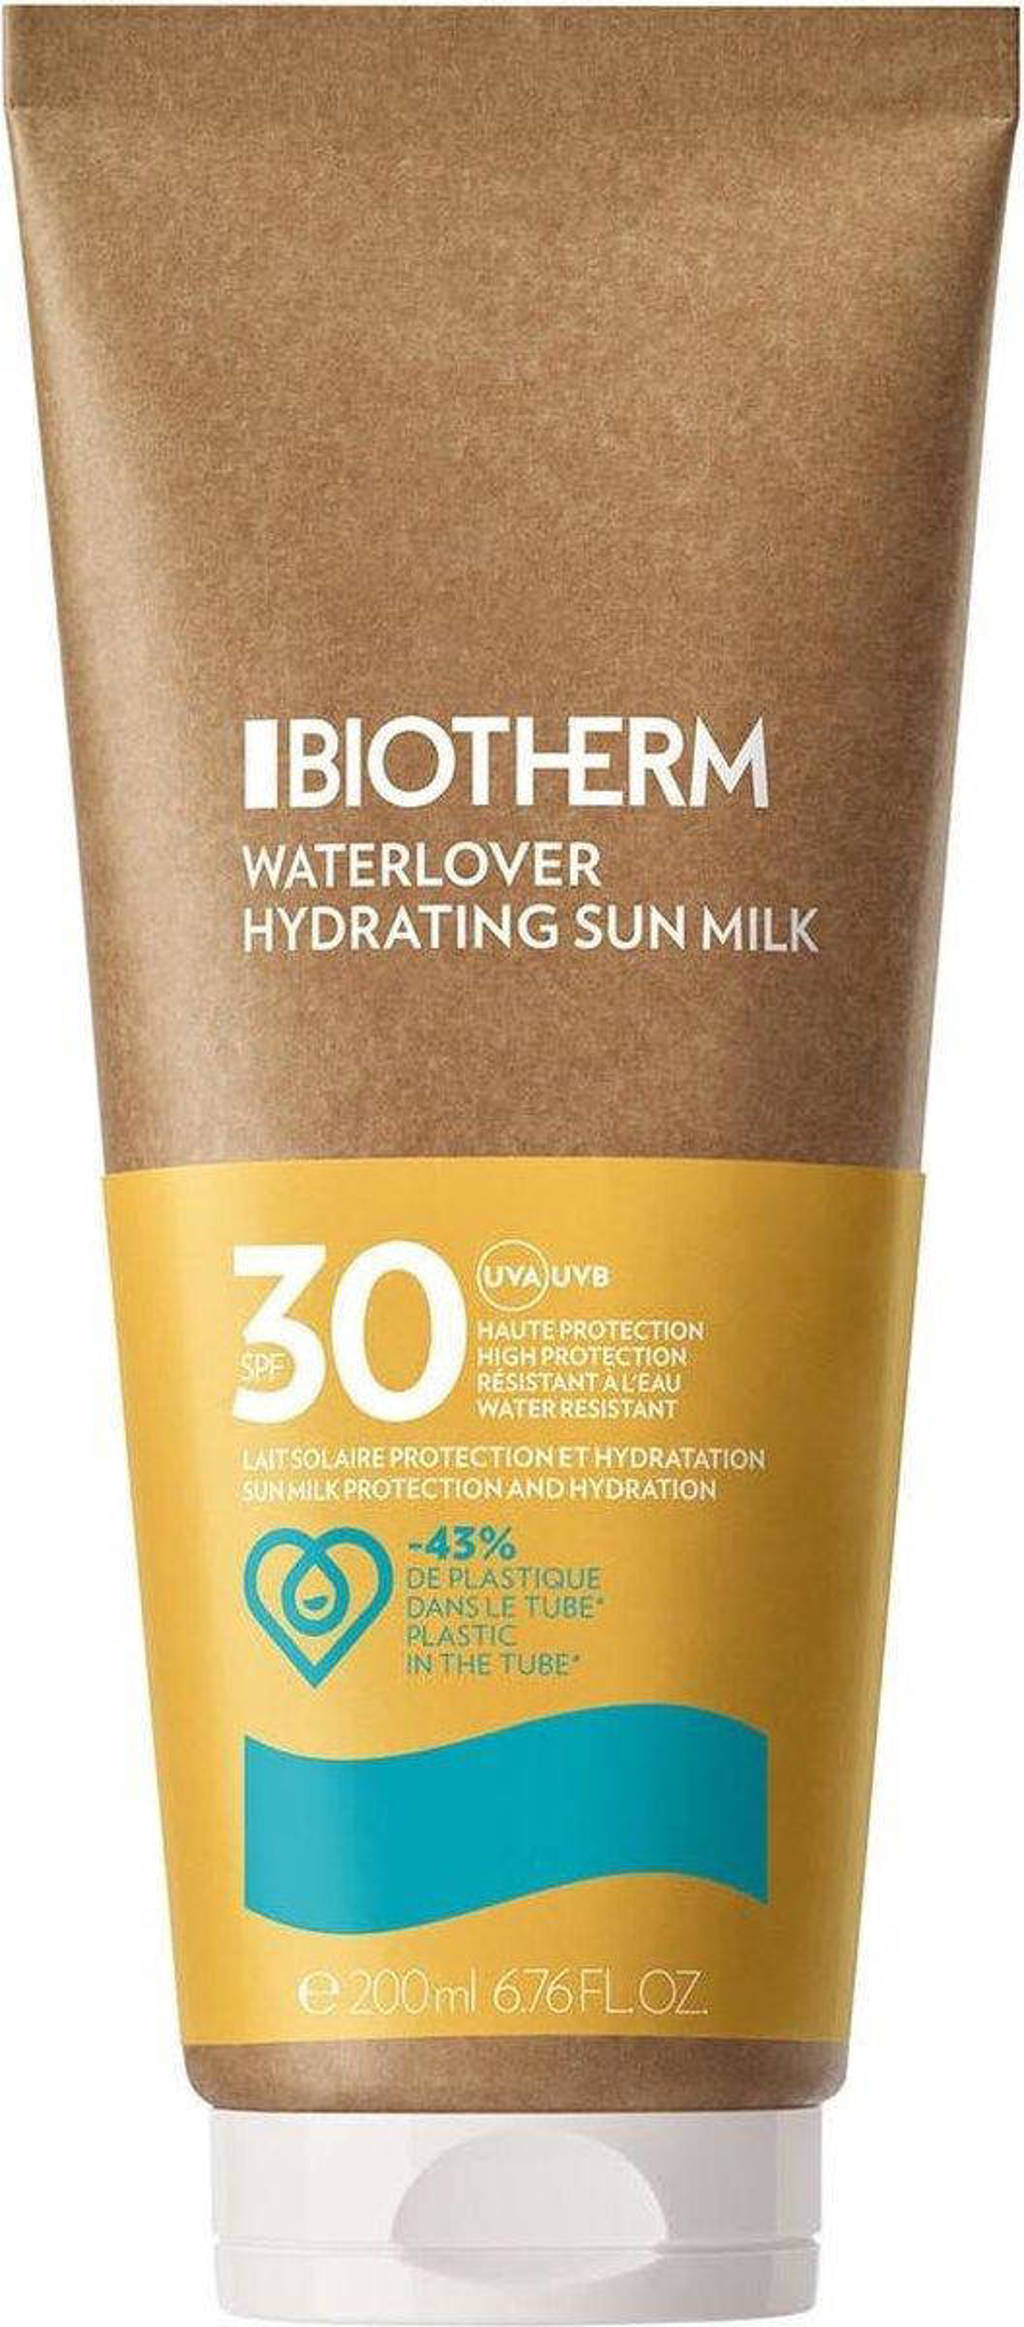 Biotherm Waterlover Hydrating Sun Milk SPF 30+ - 200 ml